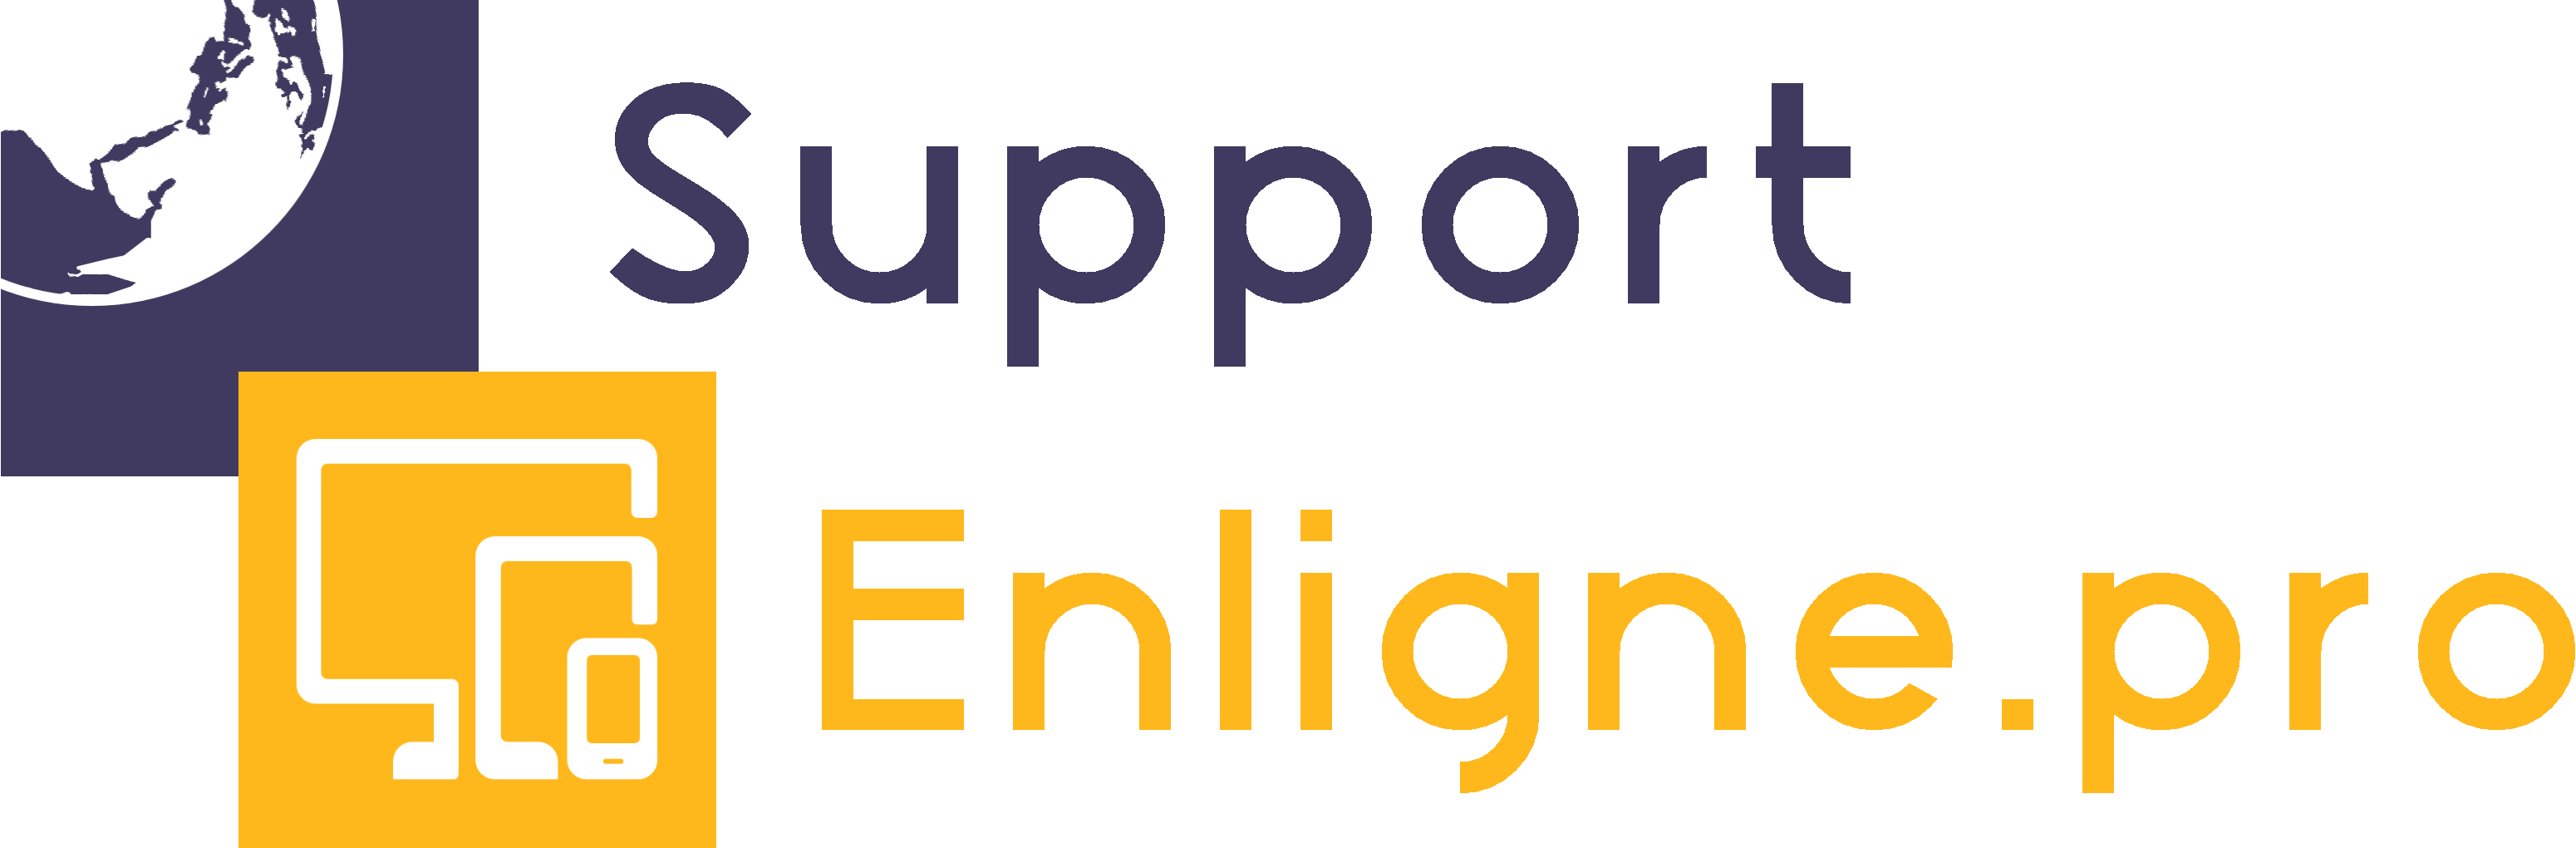 Support-Enligne.pro